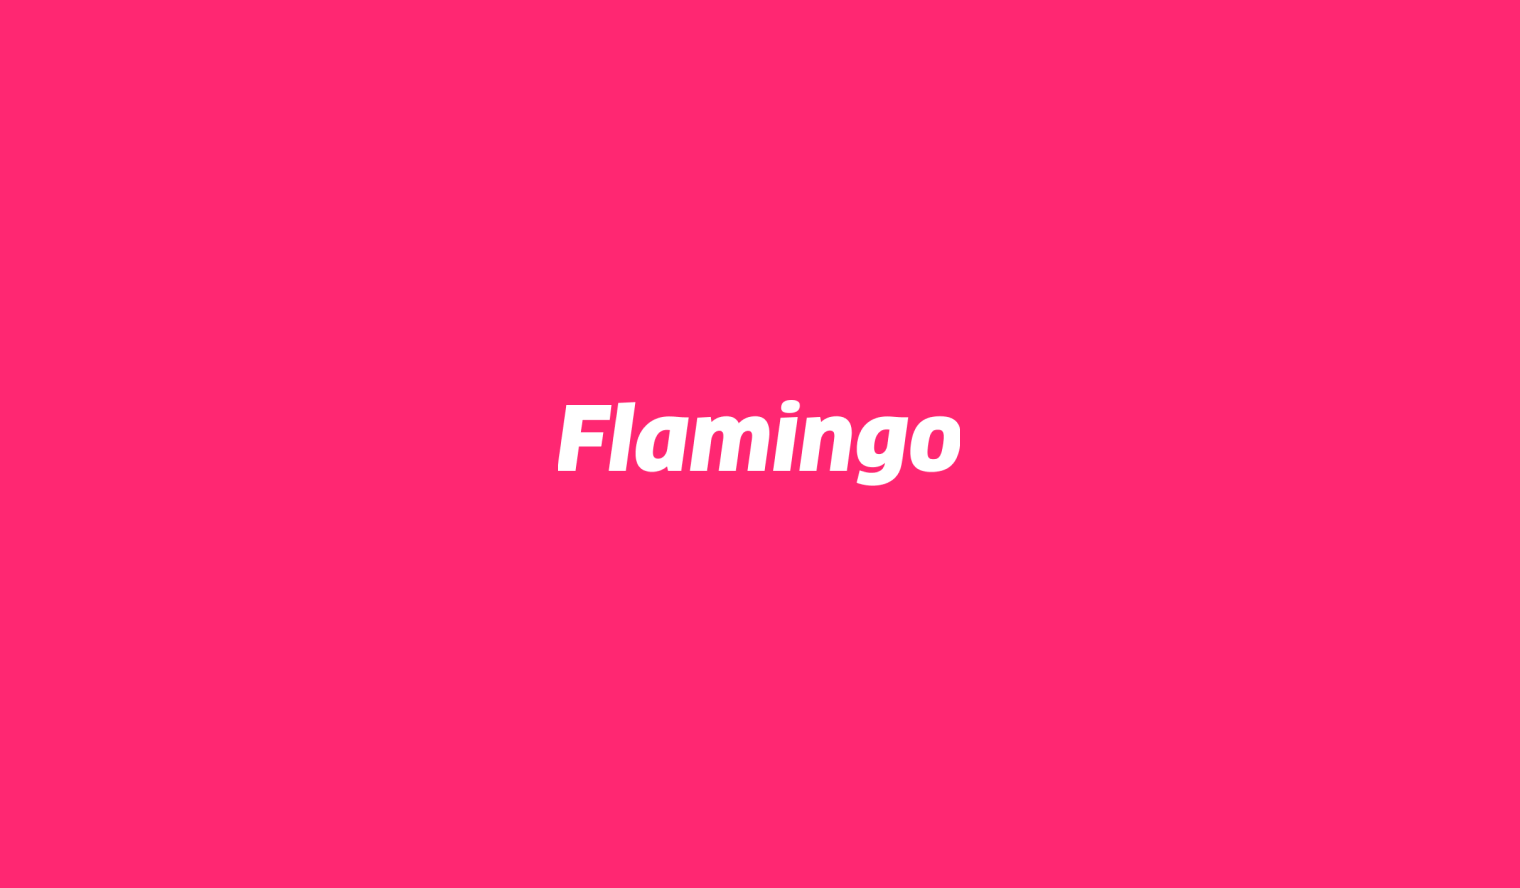 Flamingo Design System